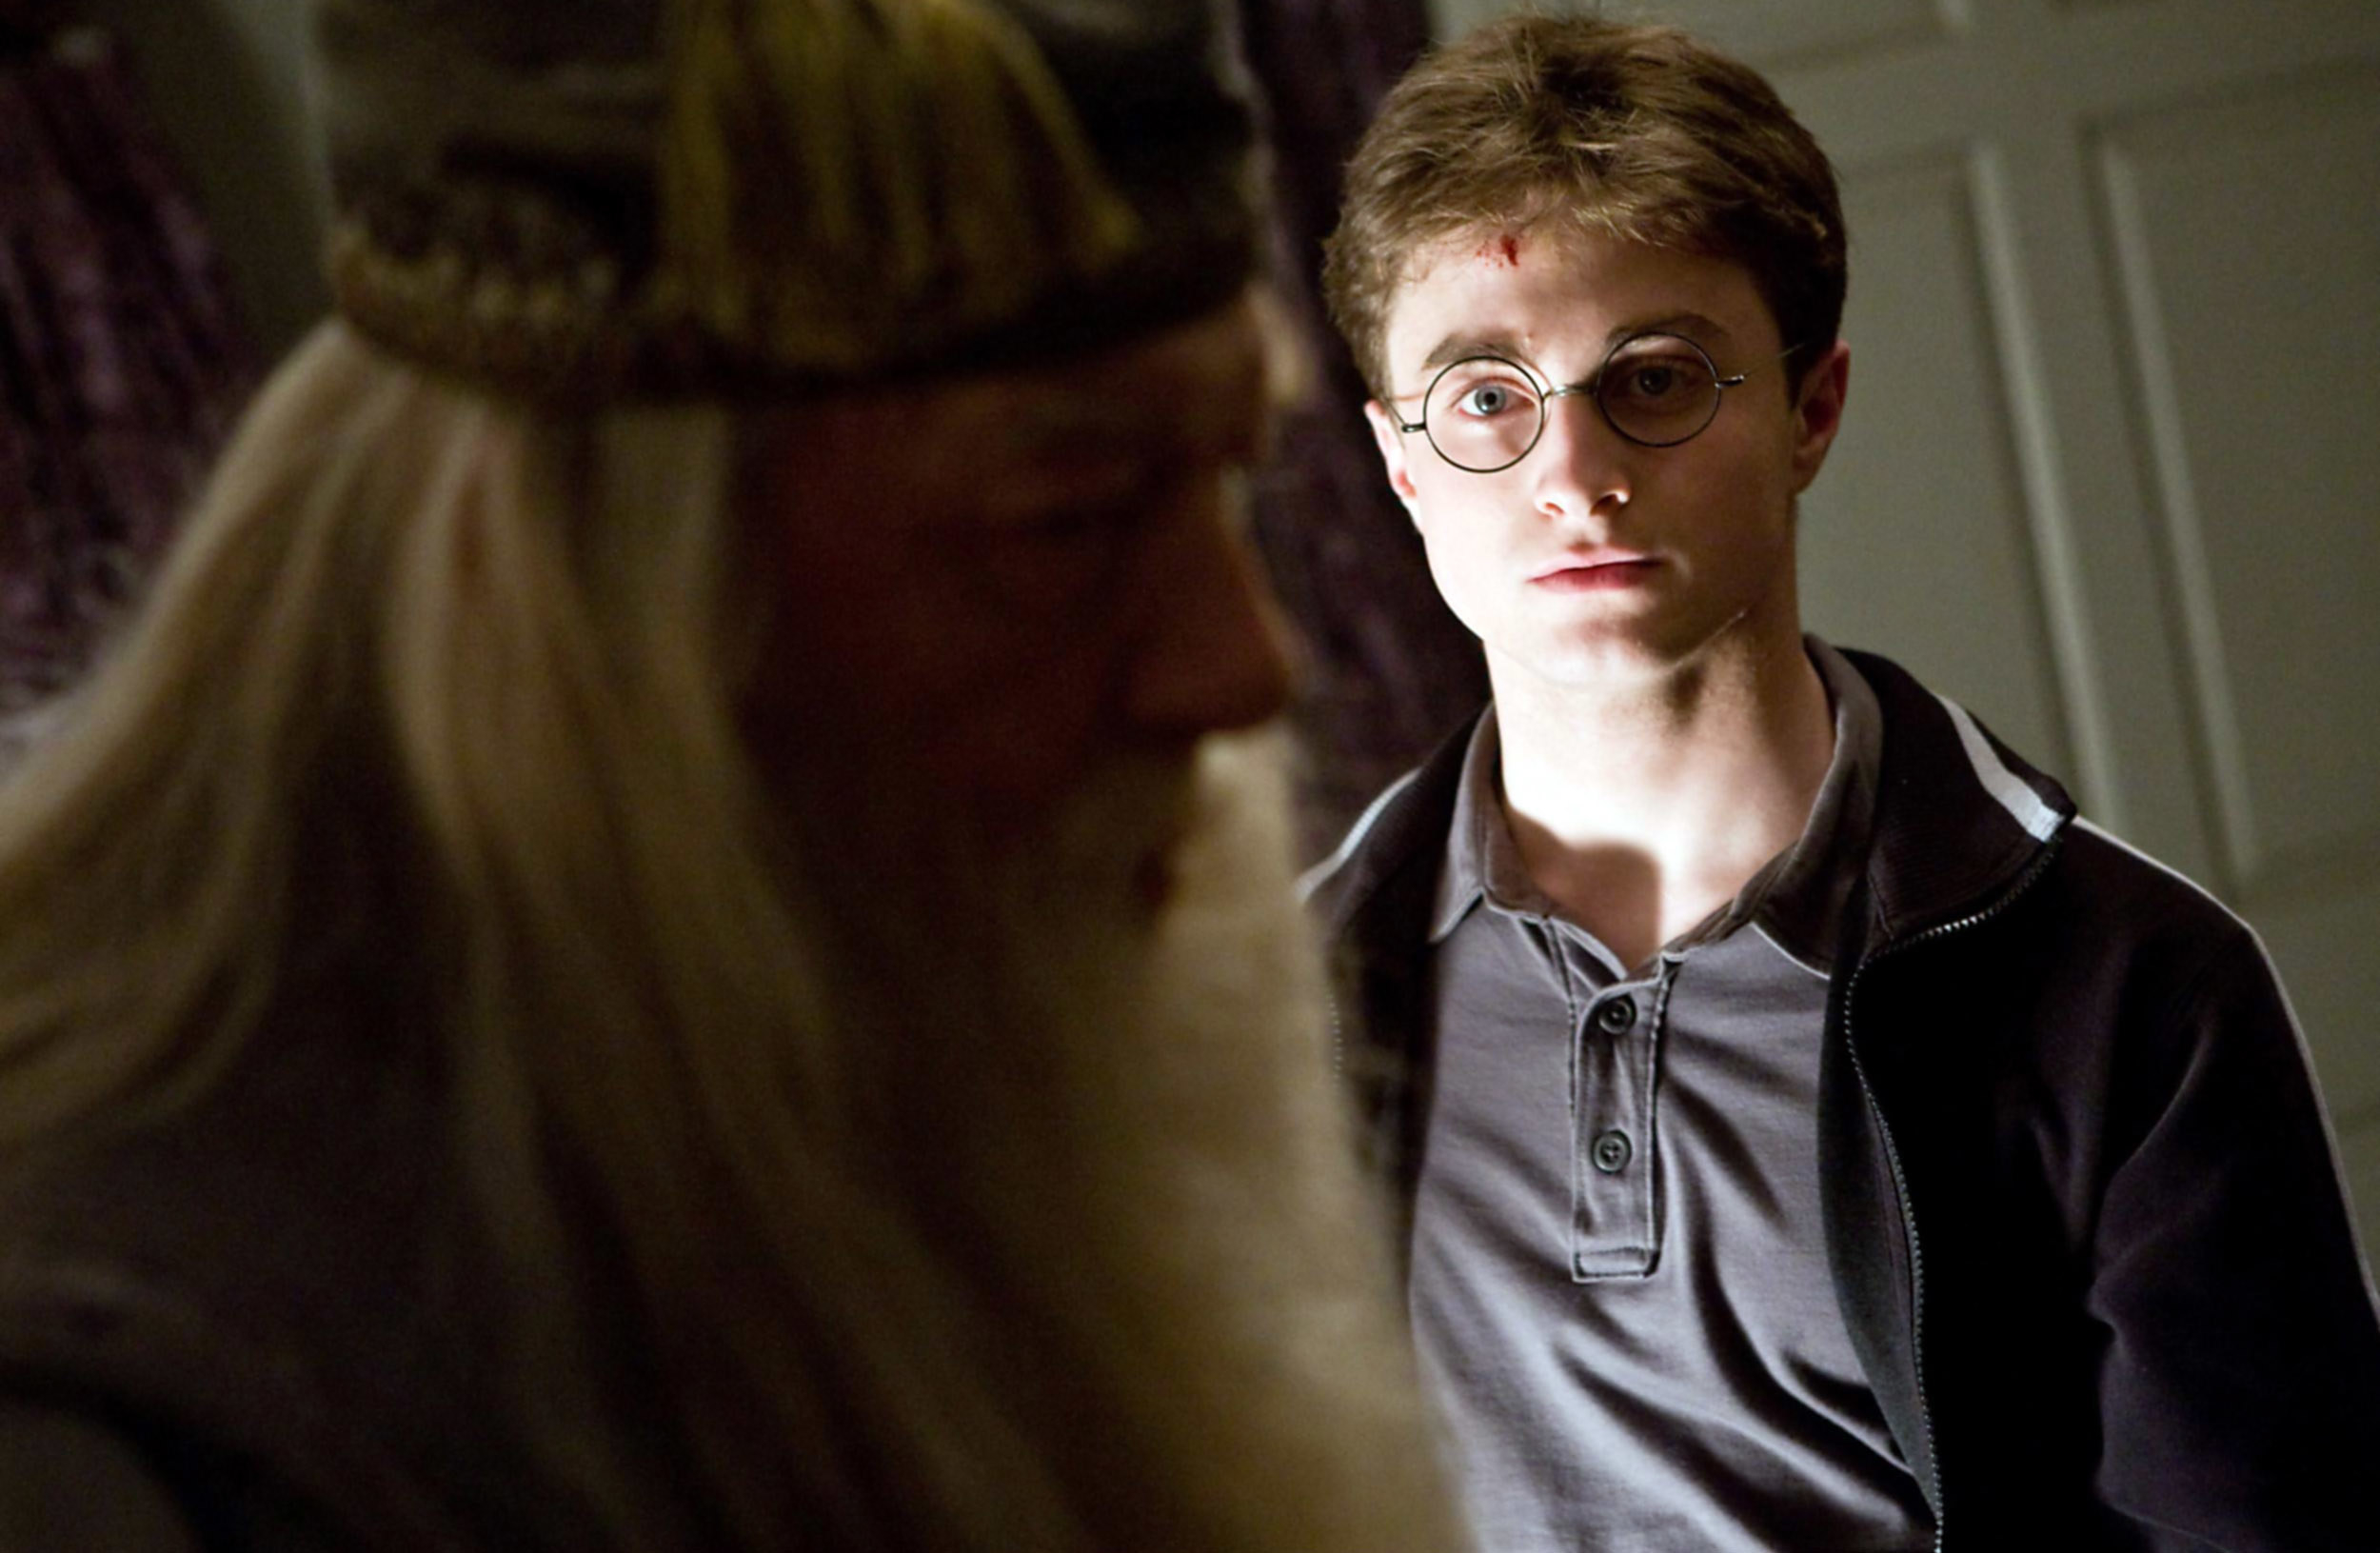 Daniel in the sixth film looking at Dumbledore